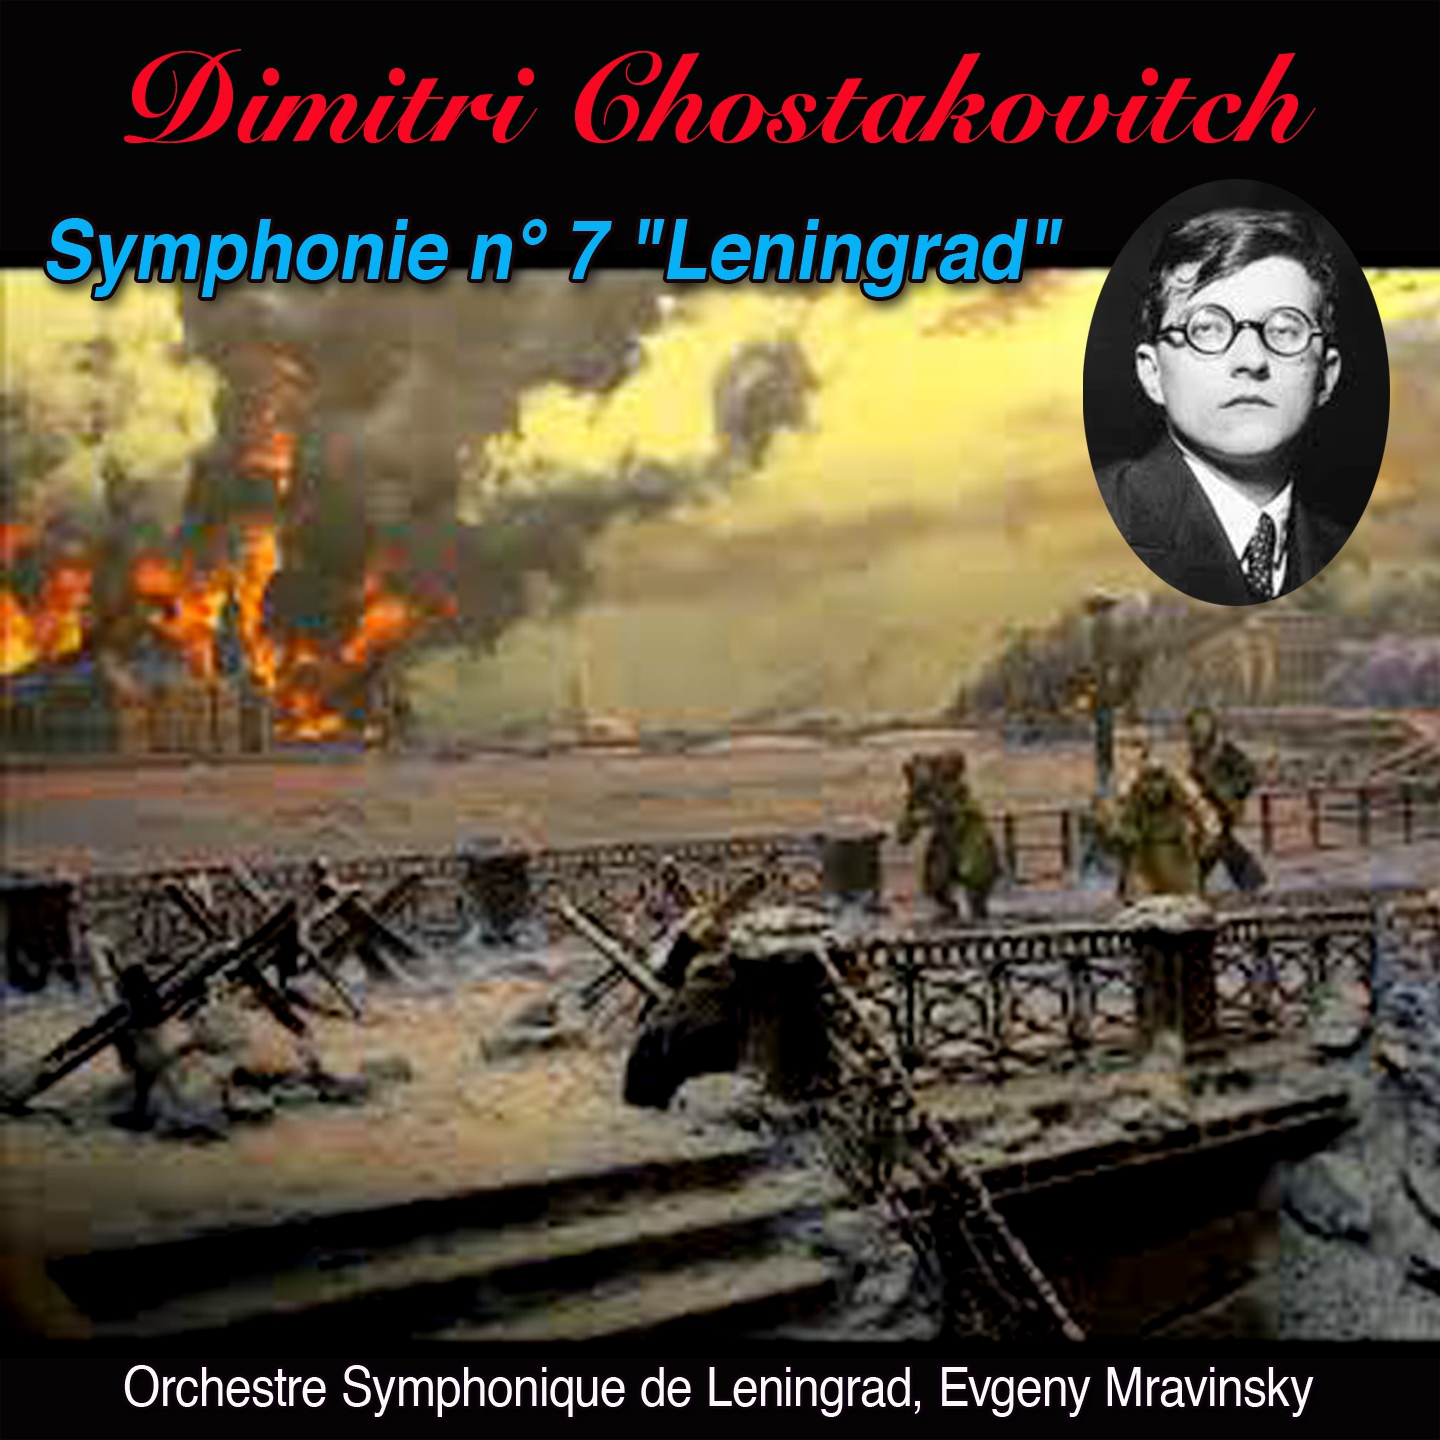 Leningrad allegro non troppo Symphonie n 7 op. 60 en ut majeur " Leningrad"